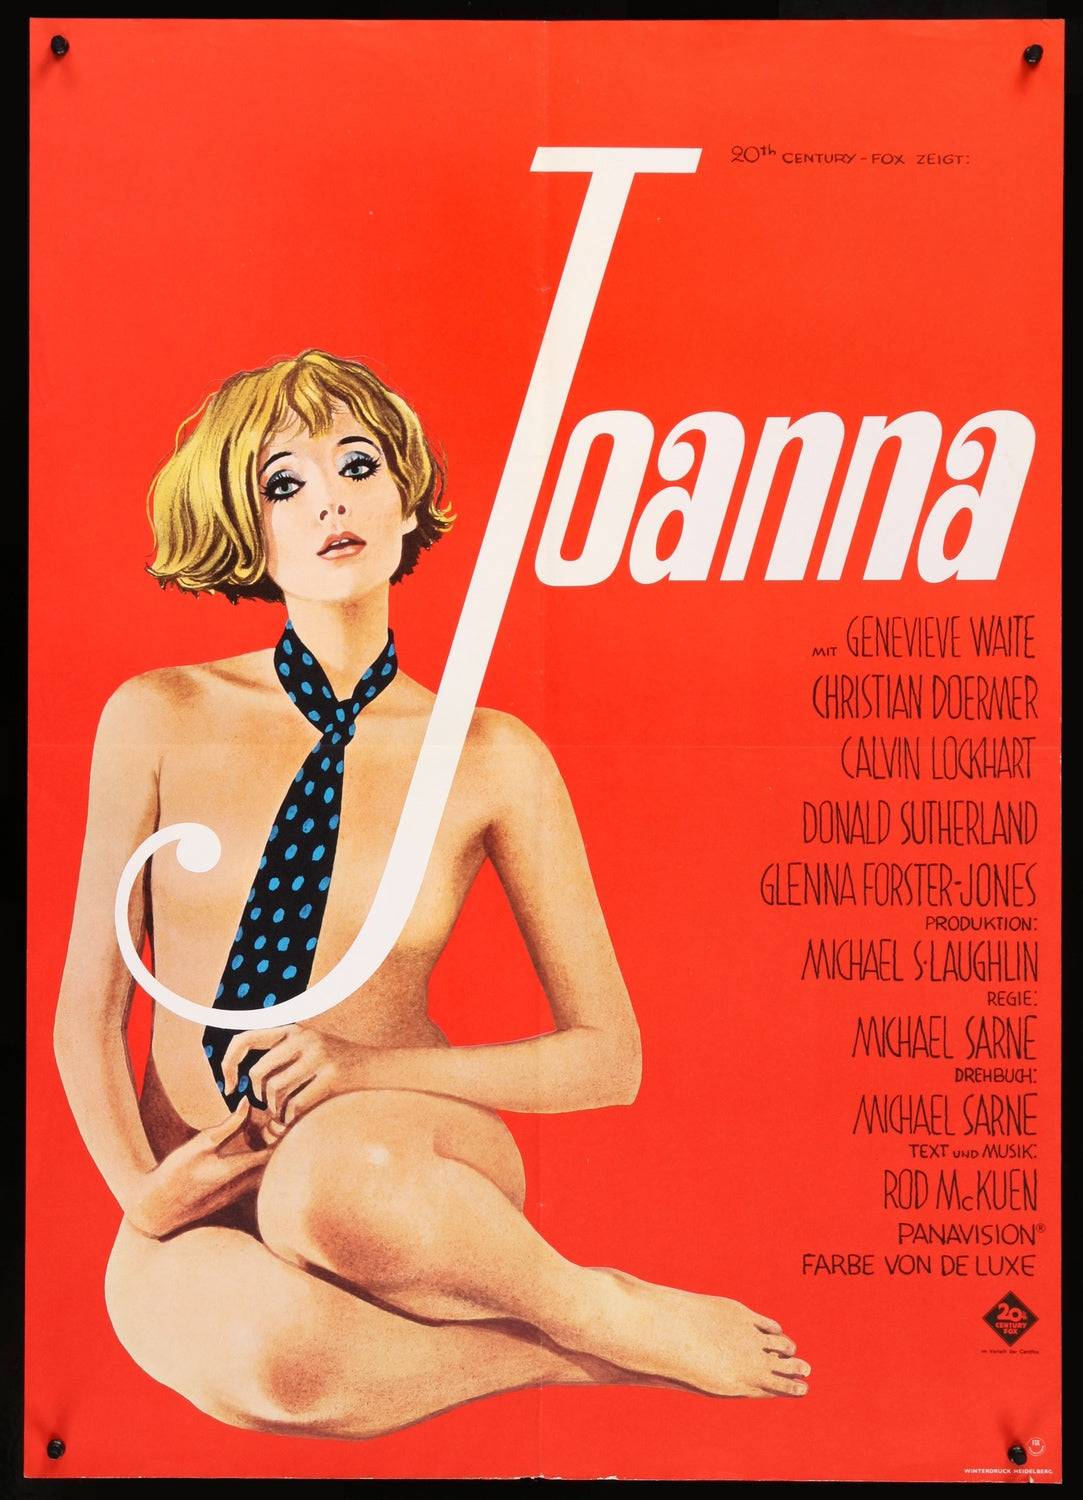 Joanna (1968) original movie poster for sale at Original Film Art